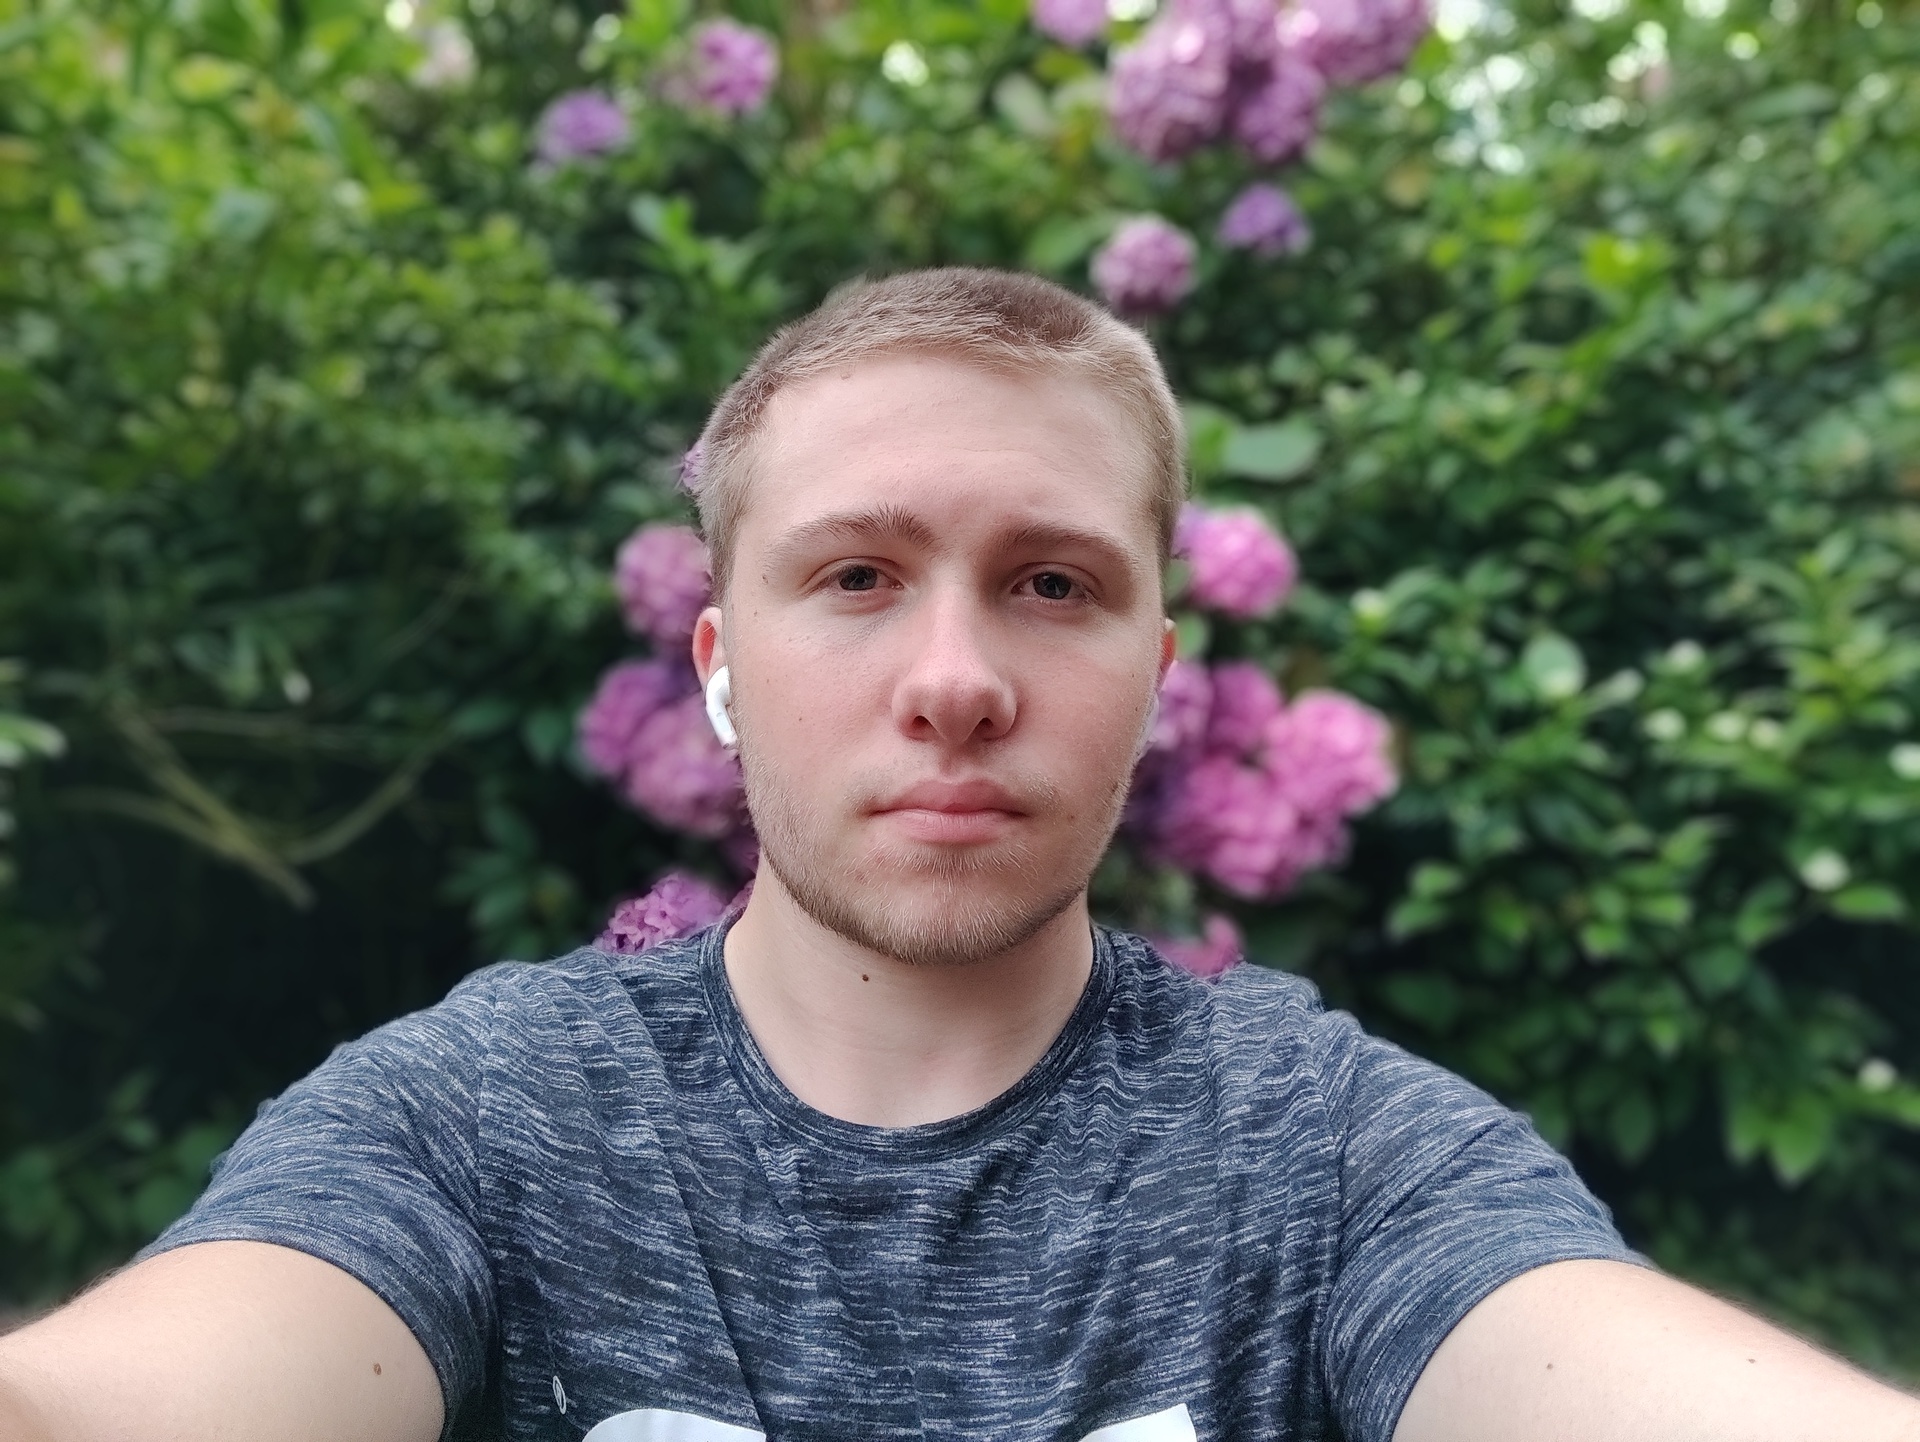 OnePlus Nord test image portrait mode selfie in garden with purple plants